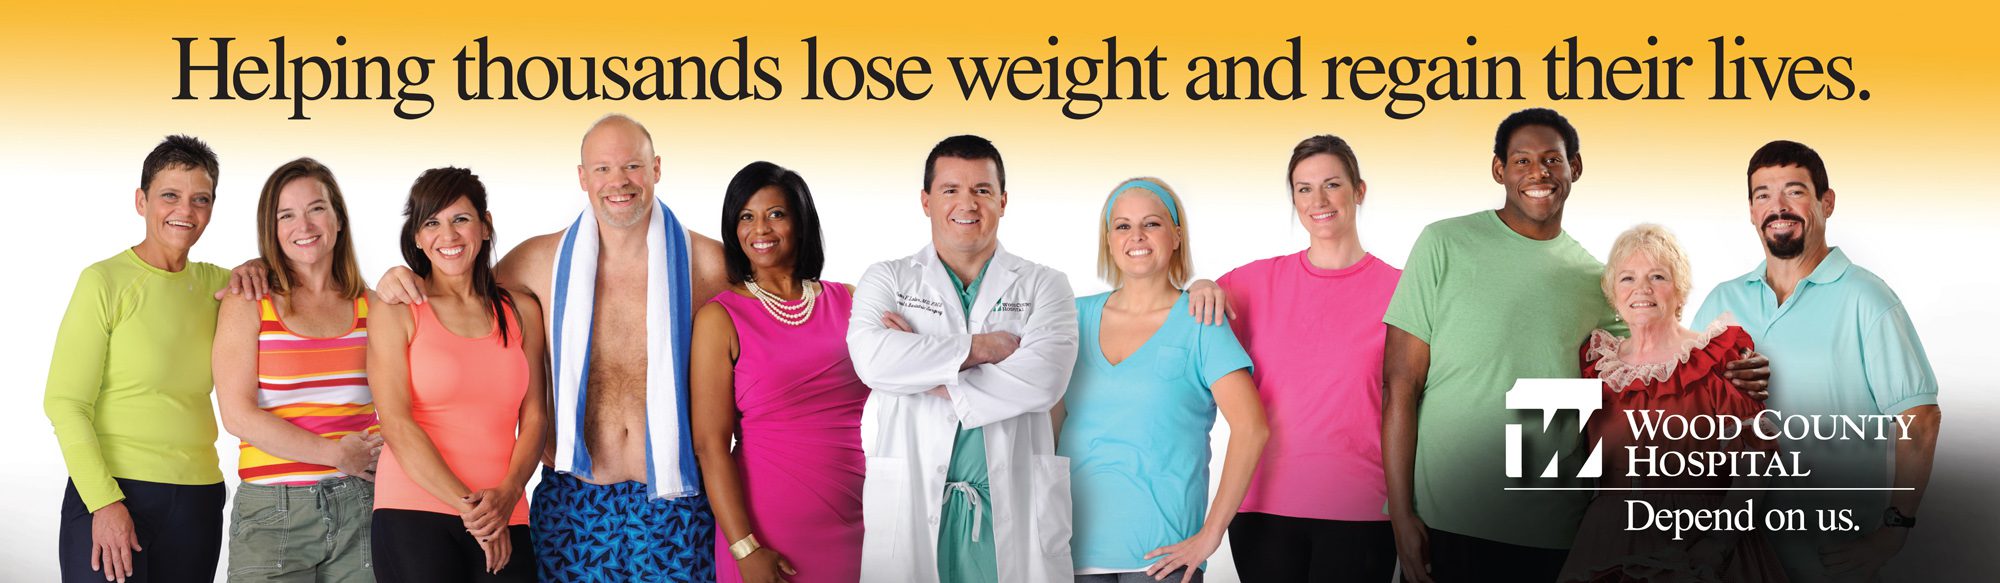 Wood County Hospital billboard for weightloss